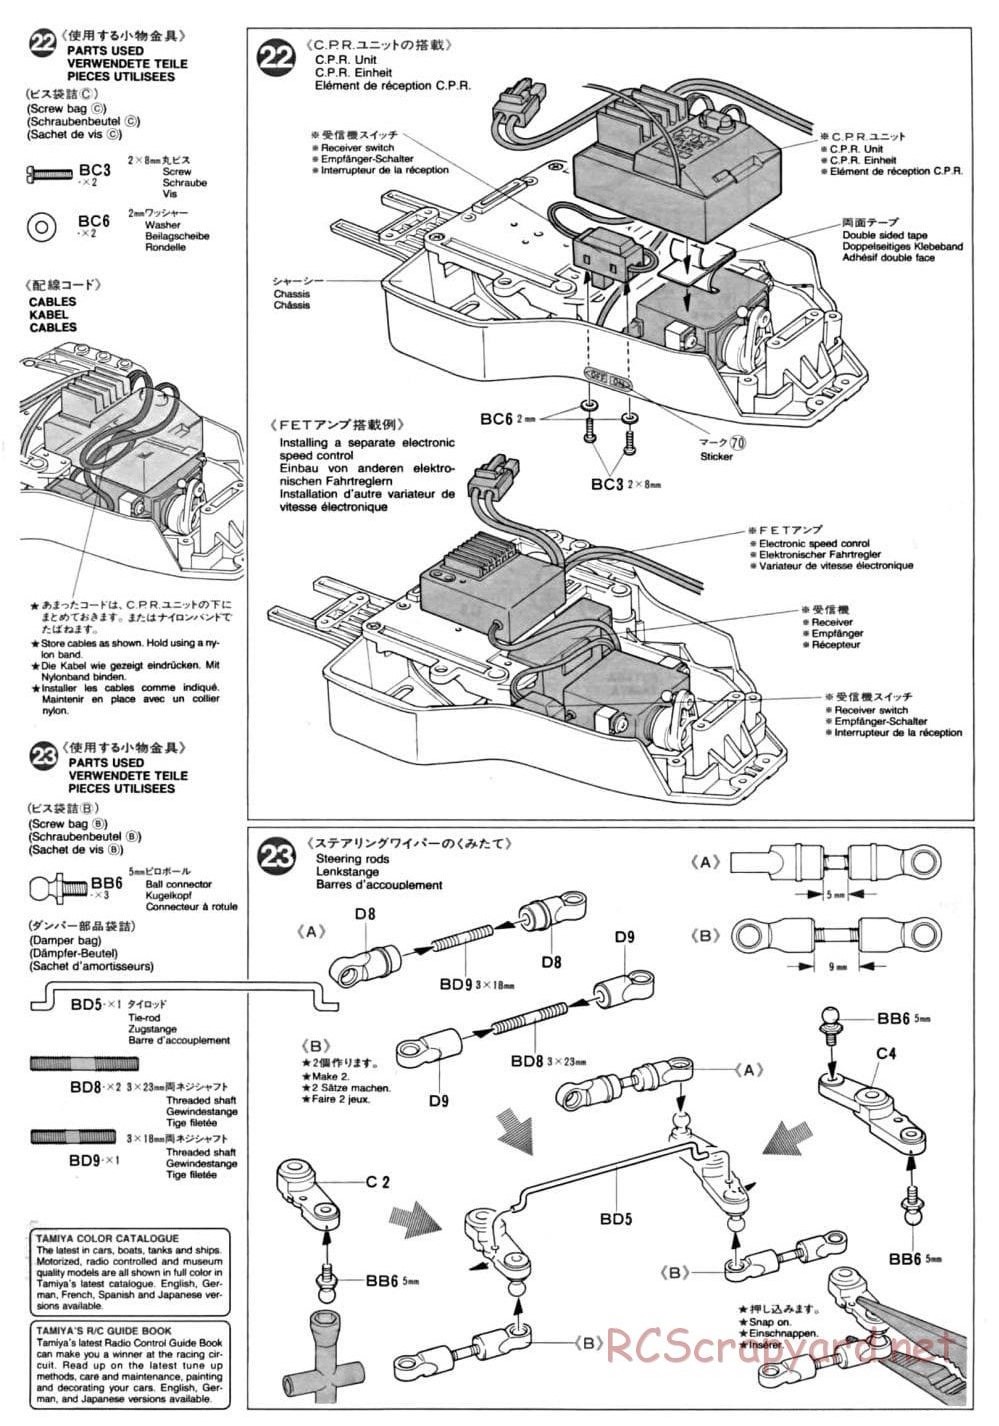 Tamiya - FF-01 Chassis - Manual - Page 12